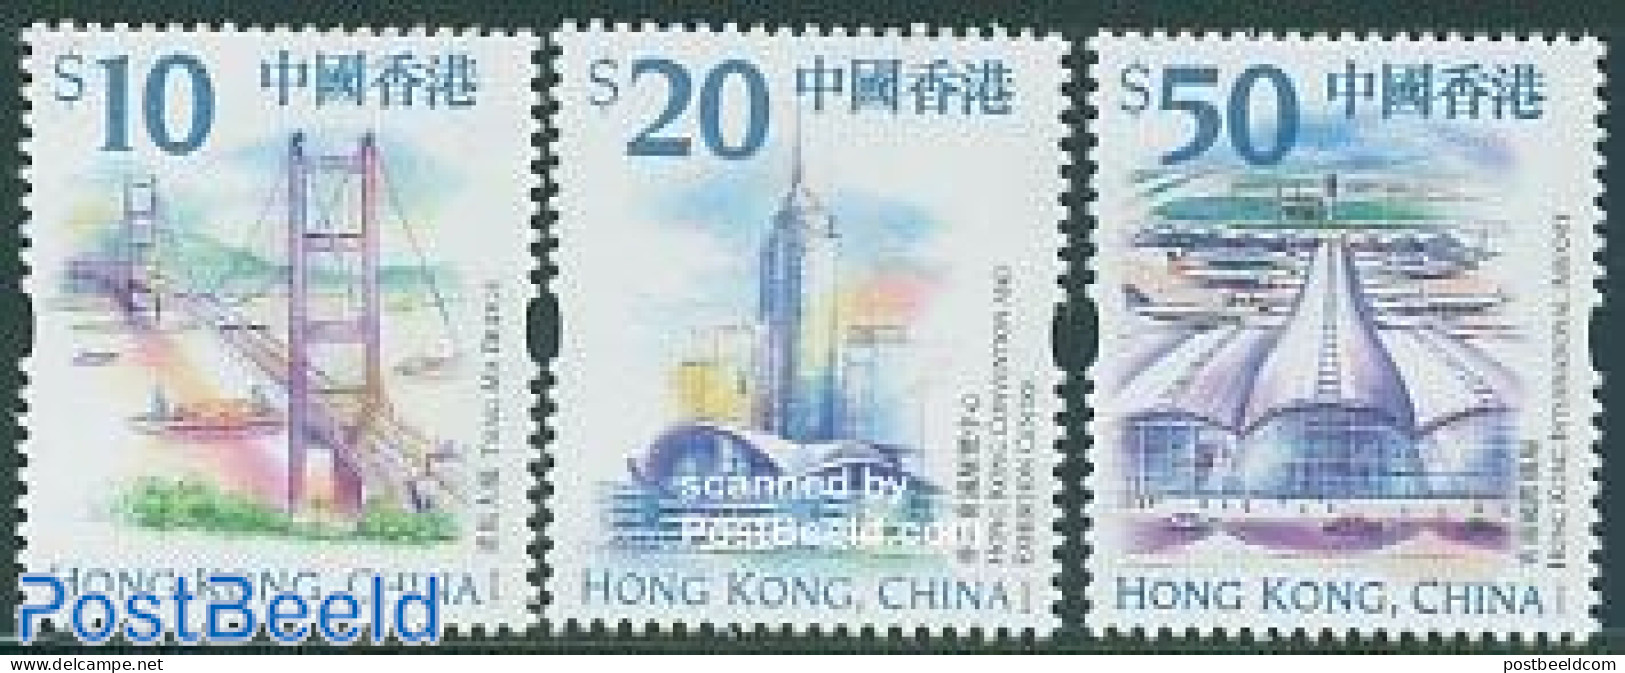 Hong Kong 1999 Definitives 3v, Mint NH, Transport - Aircraft & Aviation - Art - Bridges And Tunnels - Nuevos